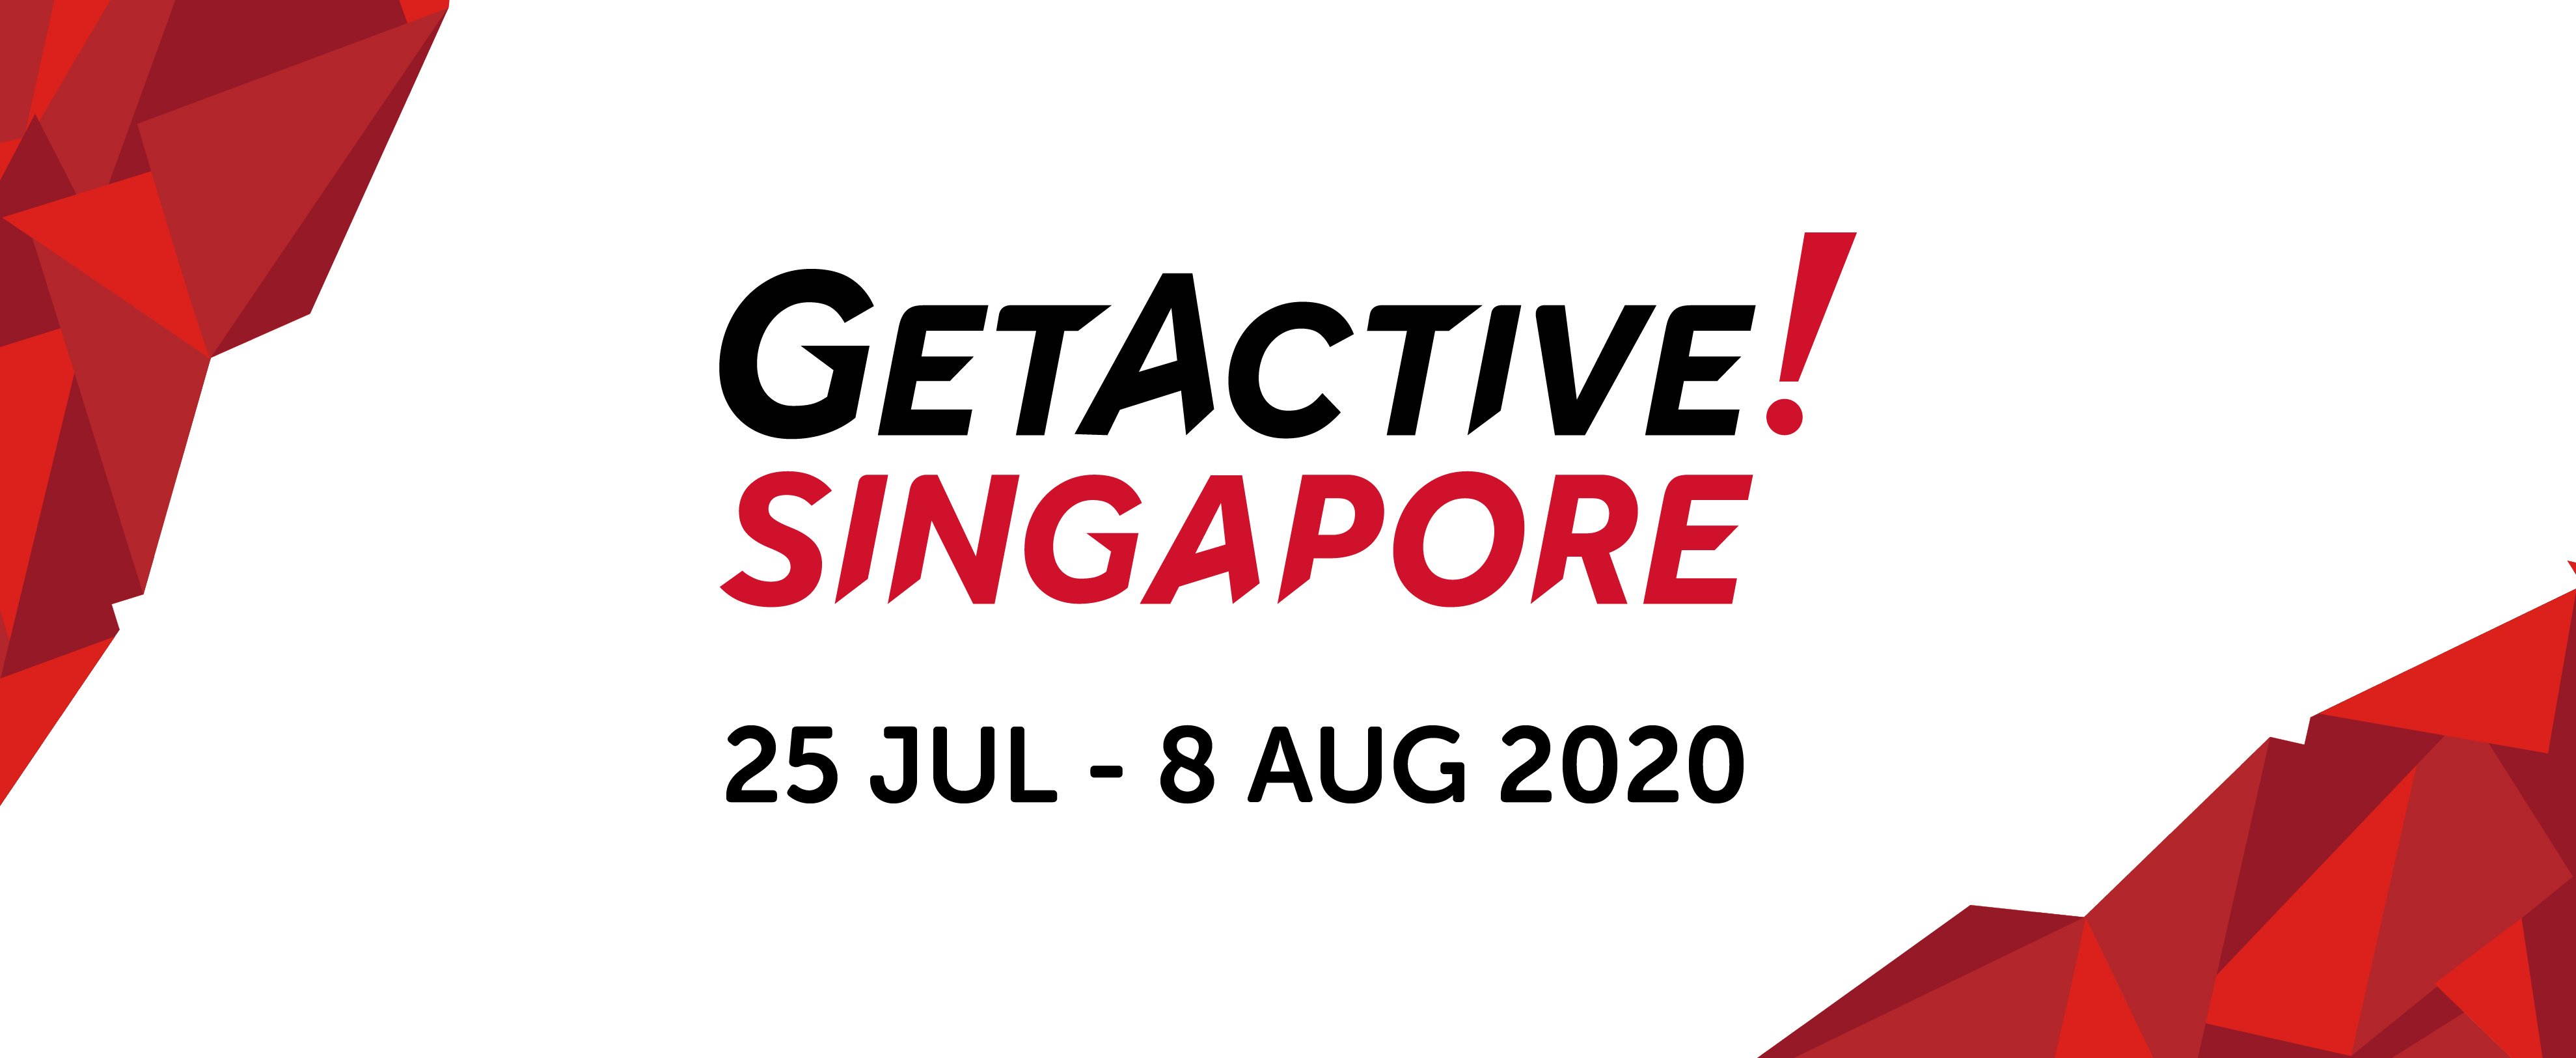 Let's GetActive! Singapore